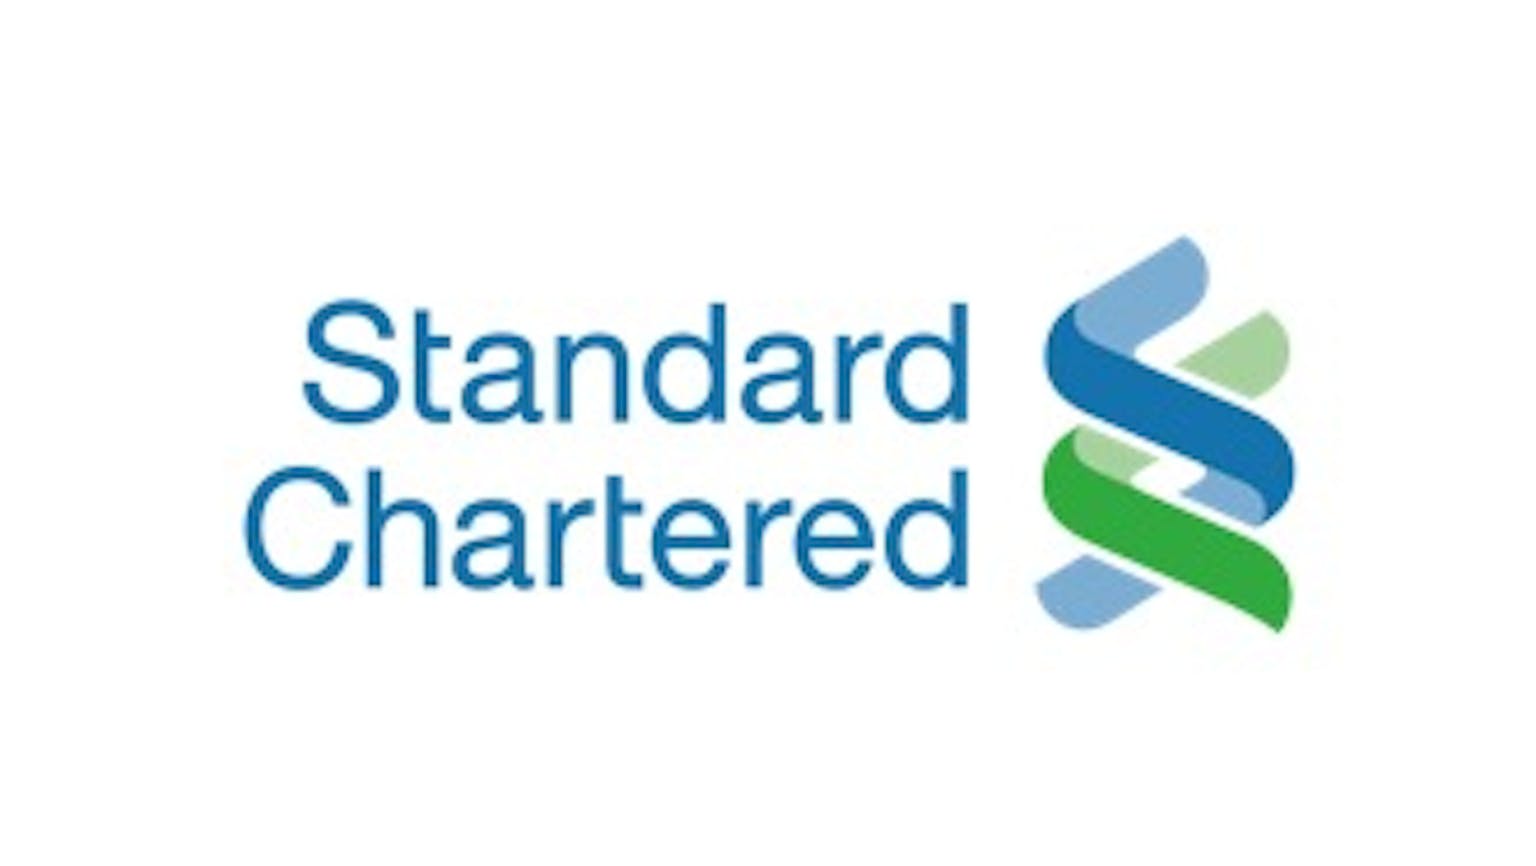 Kartu Debet Premium Standard Chartered